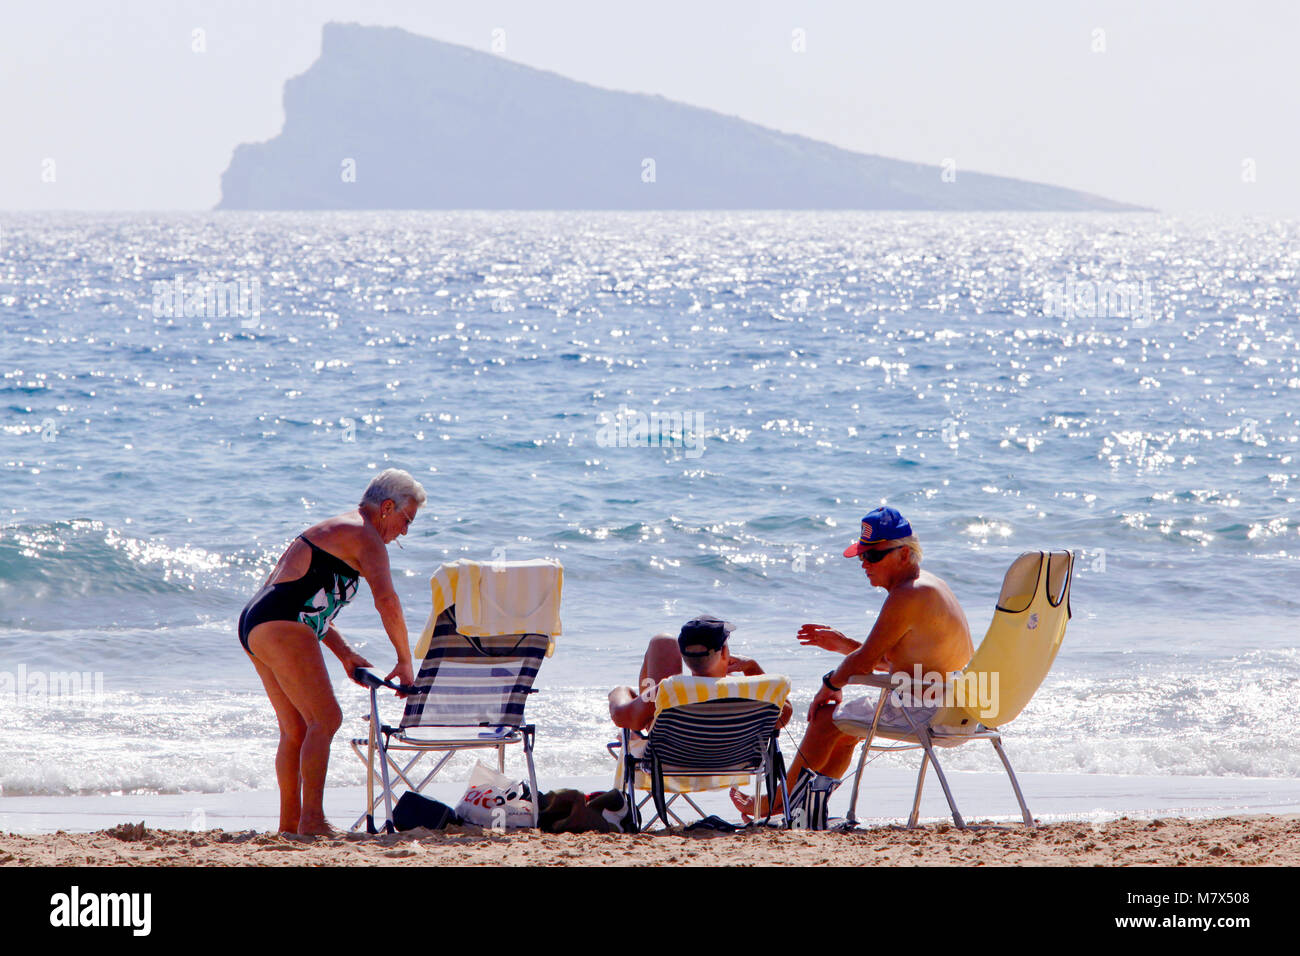 Alter Rentner mit Benidorm Insel/L'Illa de Benidorm/La Isla de Benidorm im Hintergrund, Benidorm, Alicante, Spanien Stockfoto